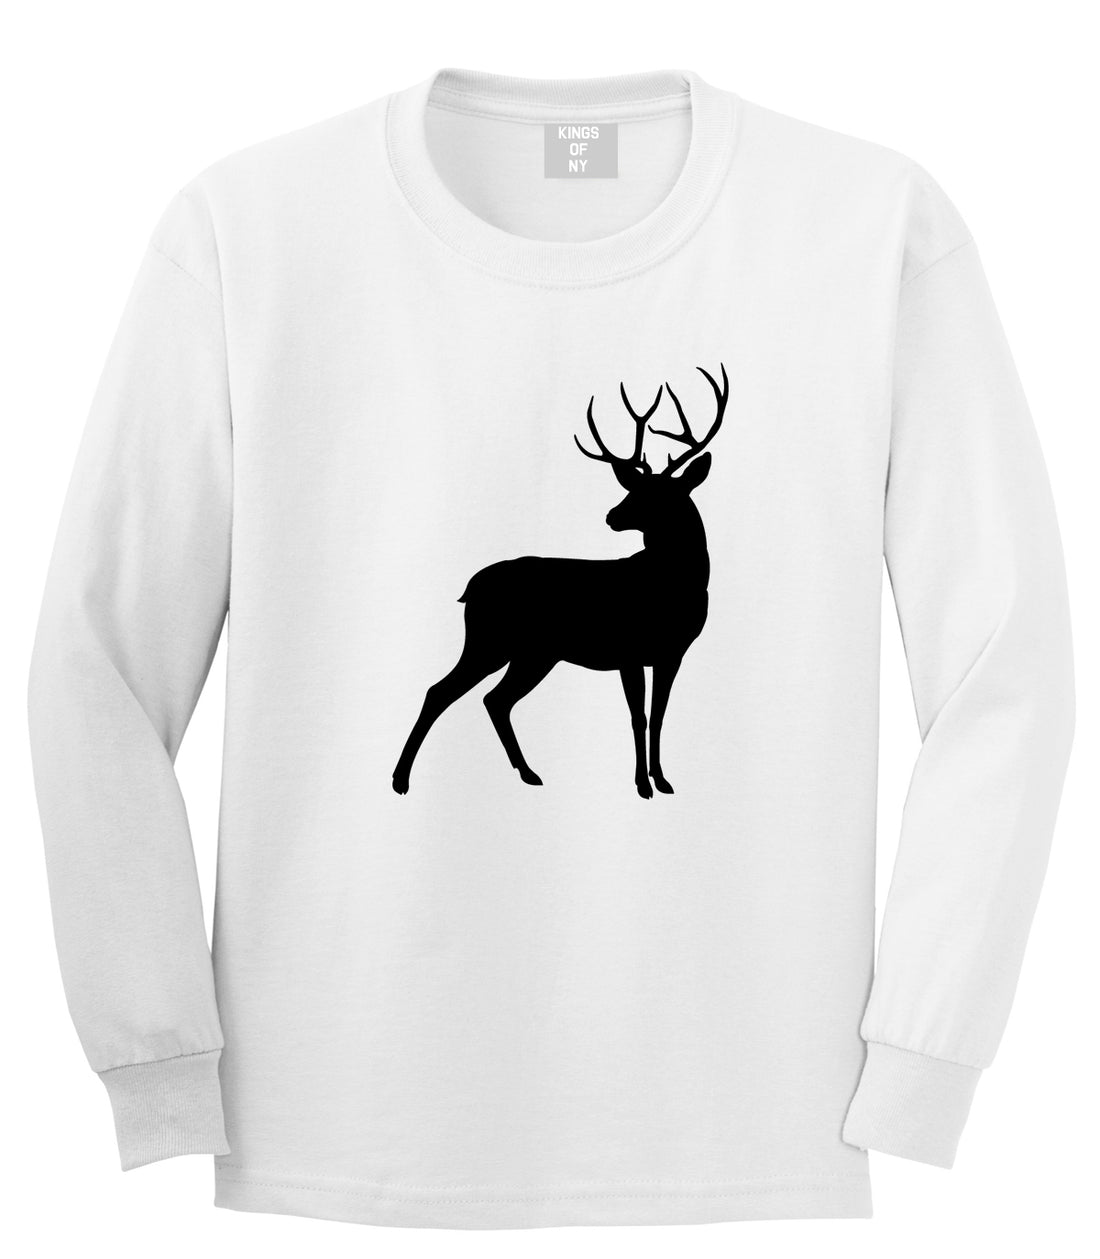 Deer Hunting Hunter Mens White Long Sleeve T-Shirt by Kings Of NY